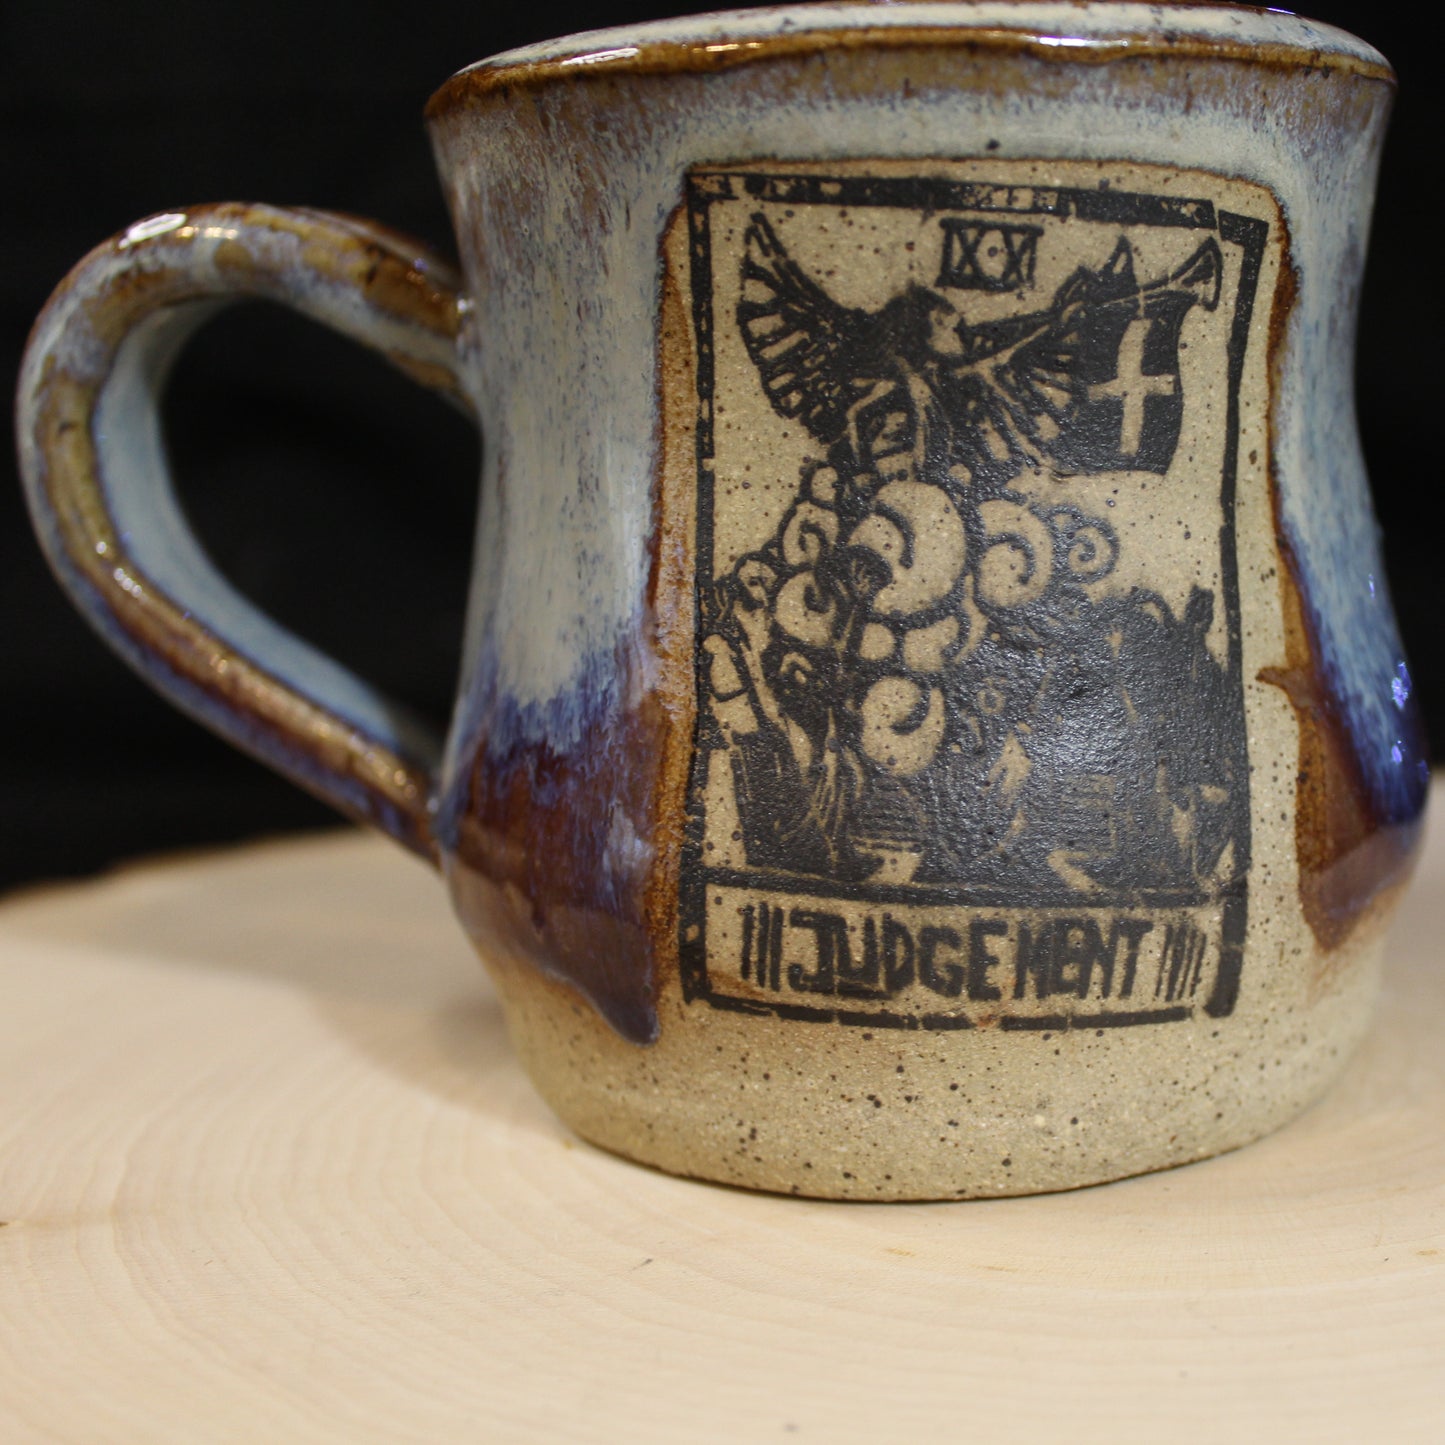 Tarot Mug - Judgement